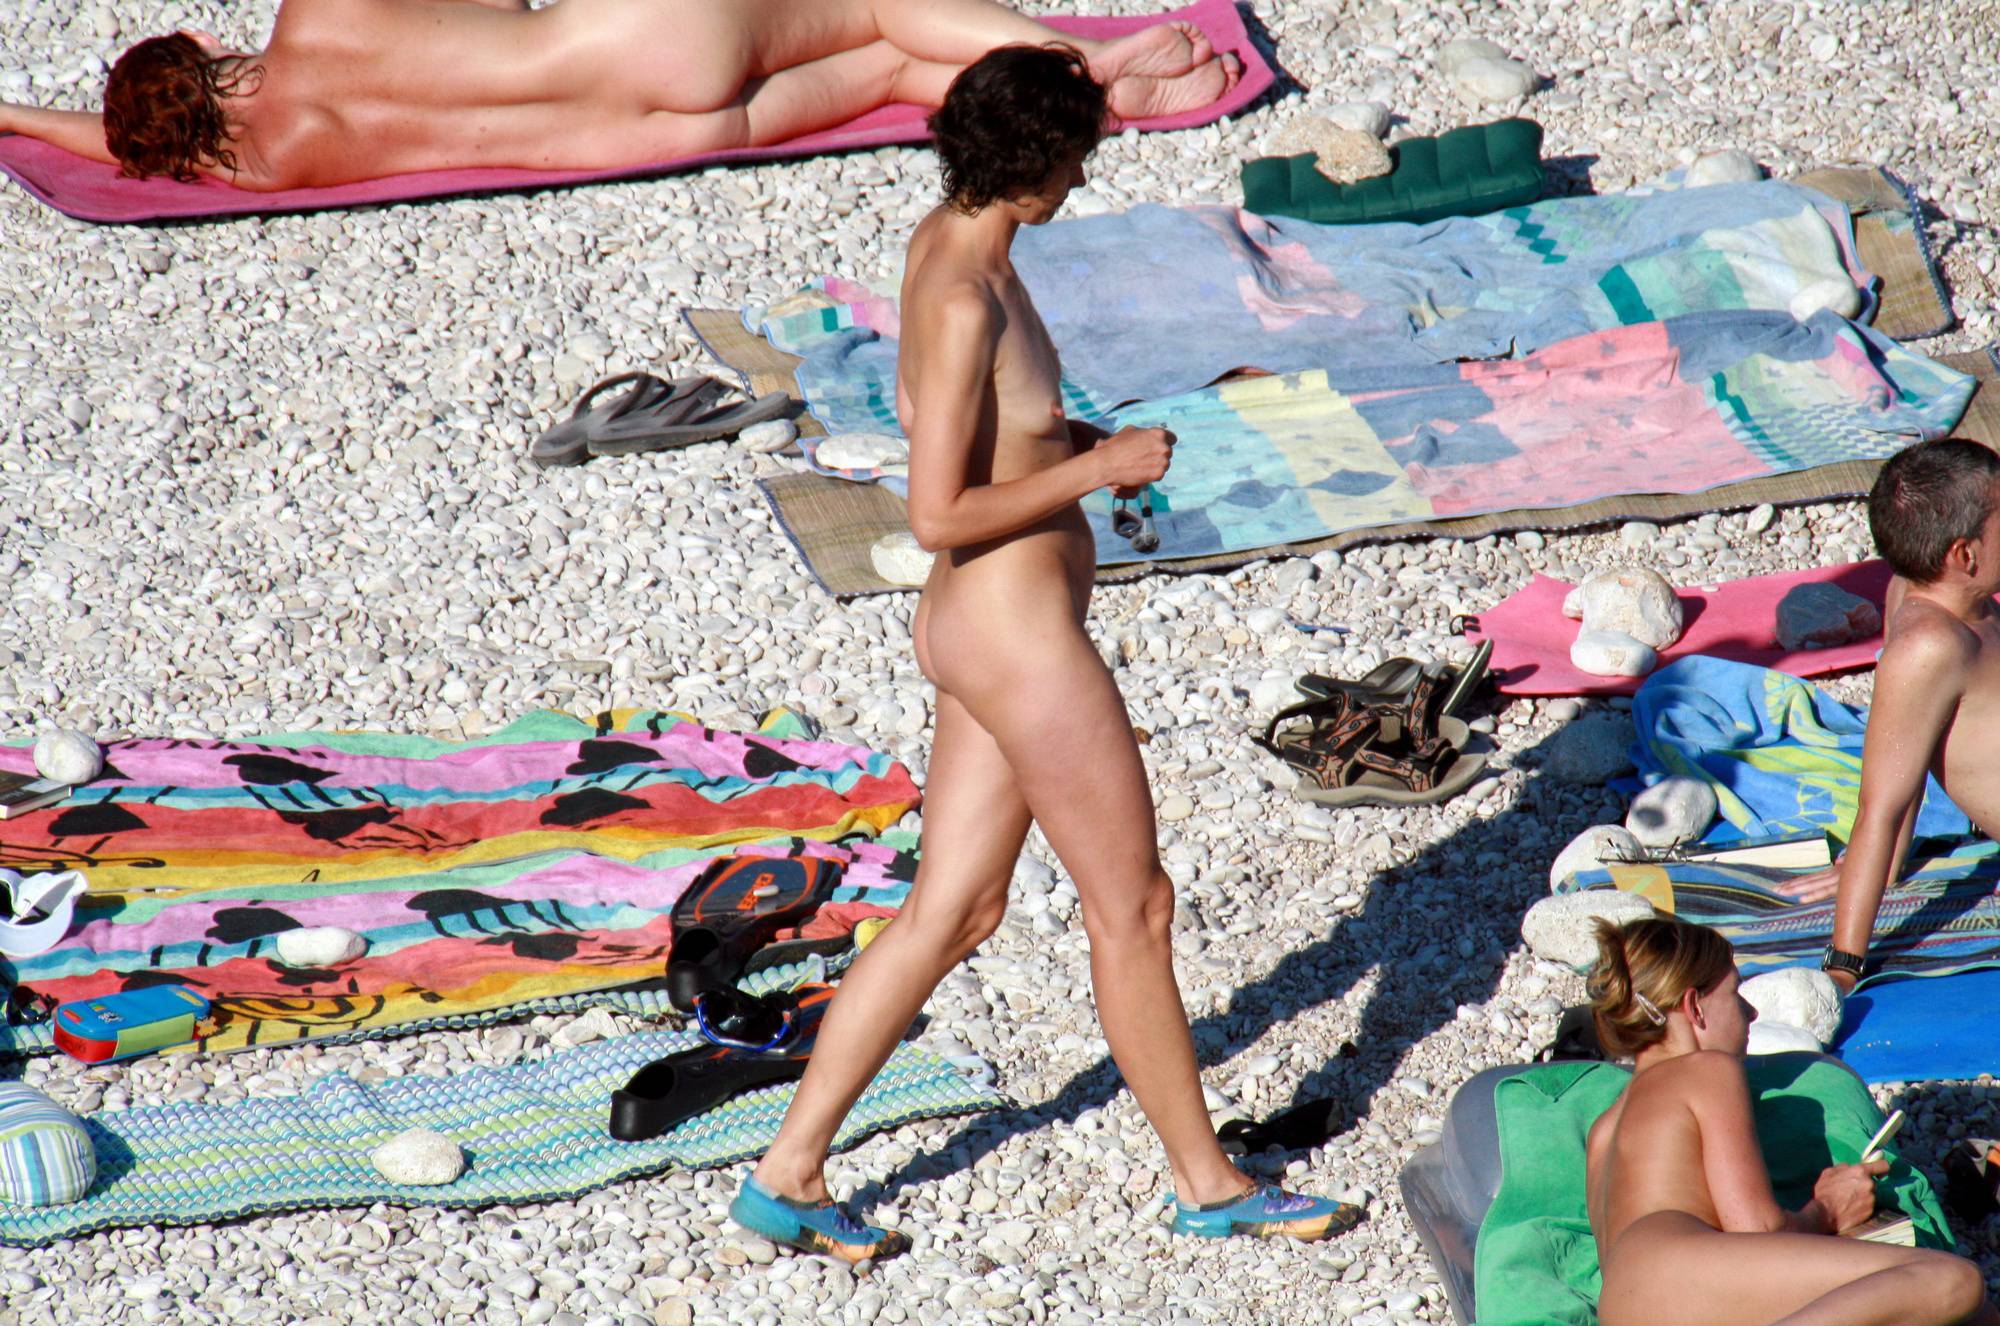 Pure Nudism Images Nudist Beach Assortment - 1